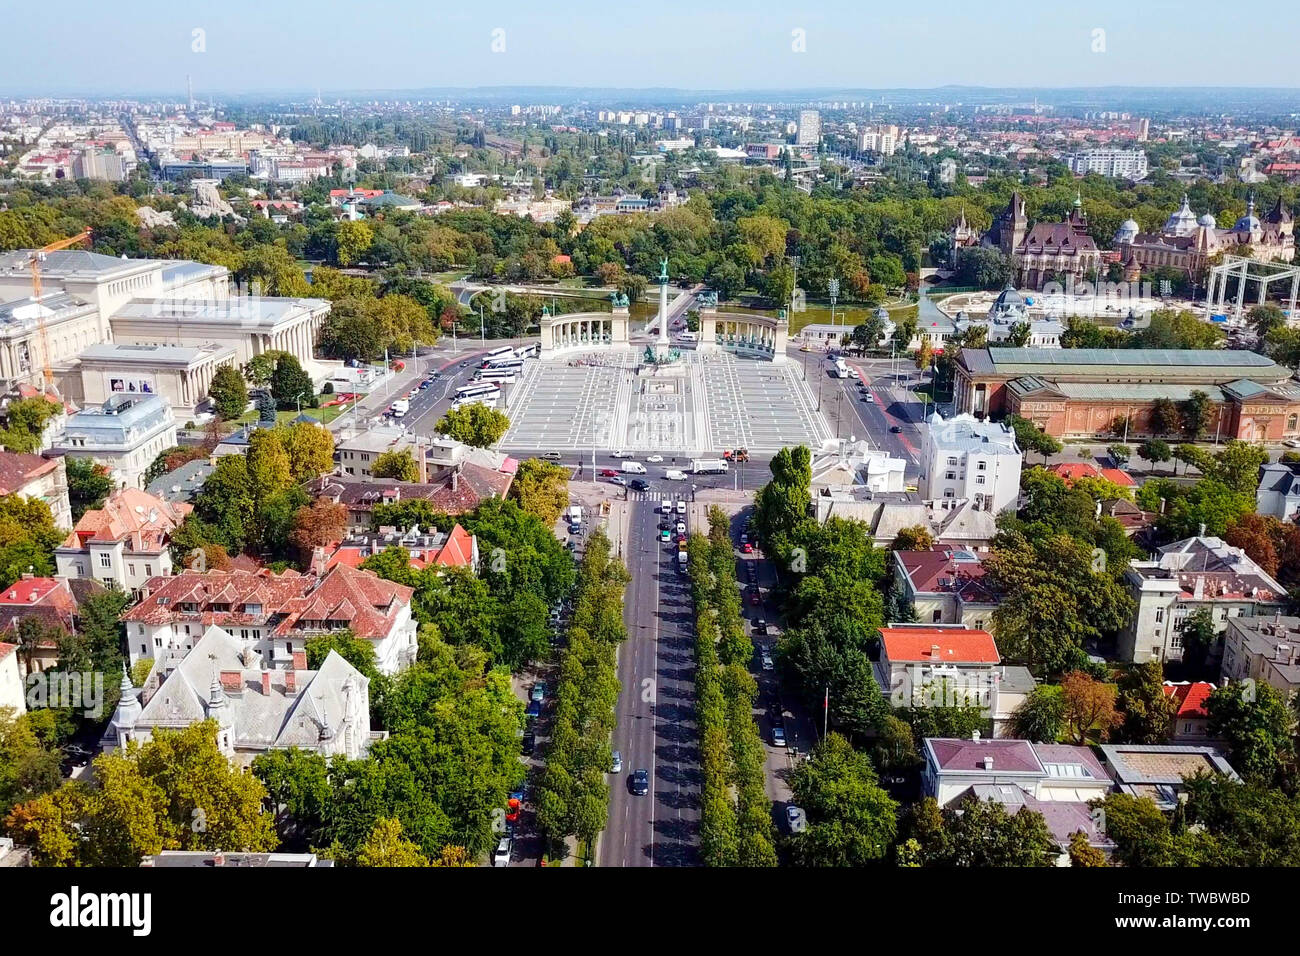 Heldenplatz (Hosok Tere) von Budapest, Ungarn - Luftansicht entlang Andrassy blvd. Stockfoto